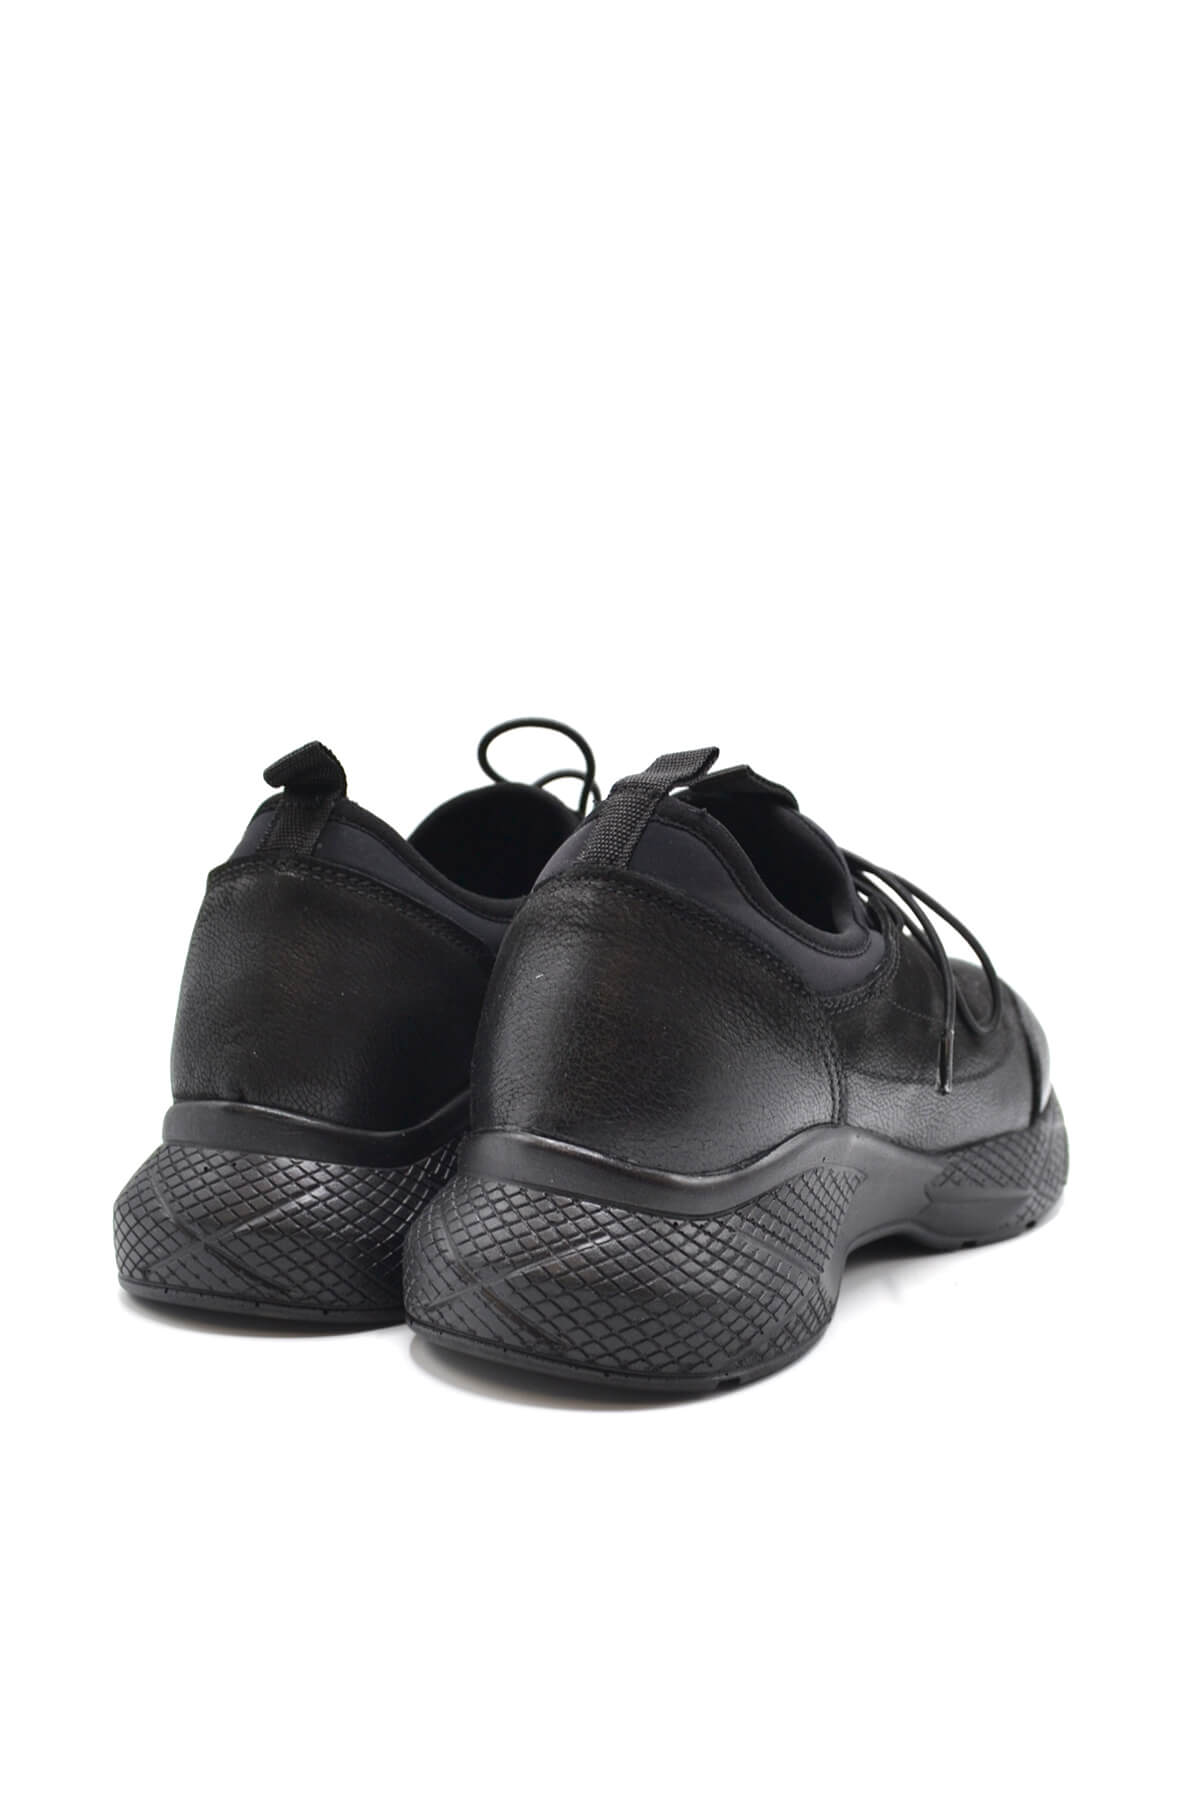 Kadın Comfort Deri Sneakers Airflow Ayakkabı Siyah 2216603K - Thumbnail